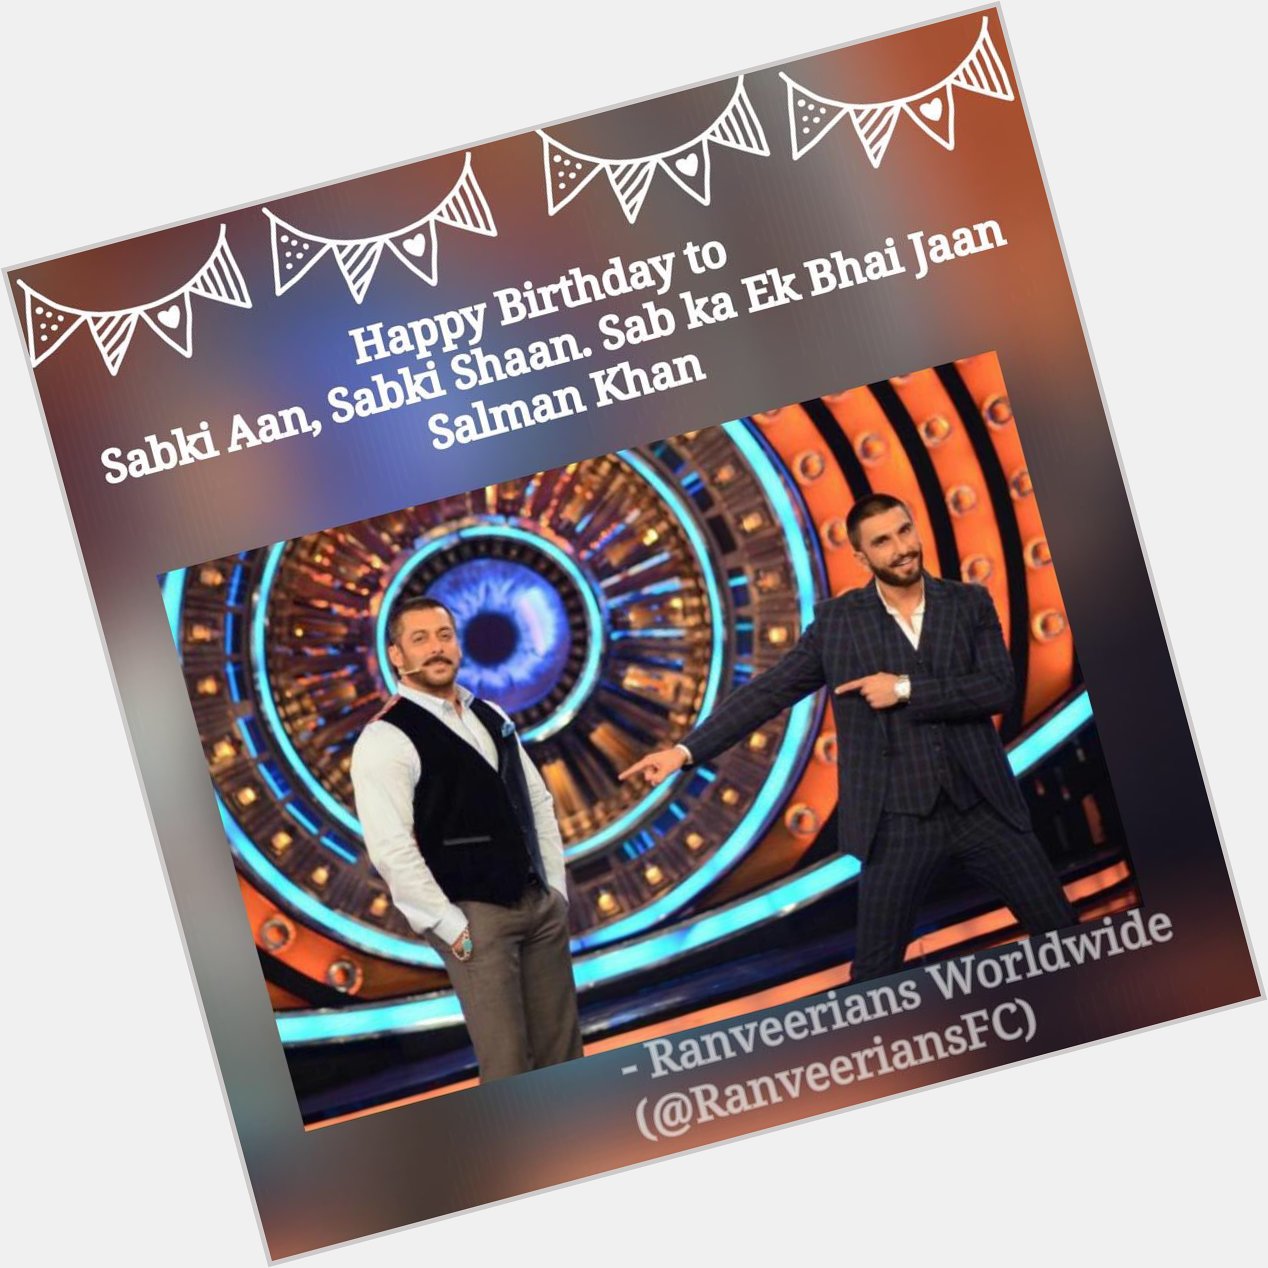 Happy Birthday to Sabki aan,sabki shaan. Sab ka ek Bhai-jaan
Mr. Salman Khan  